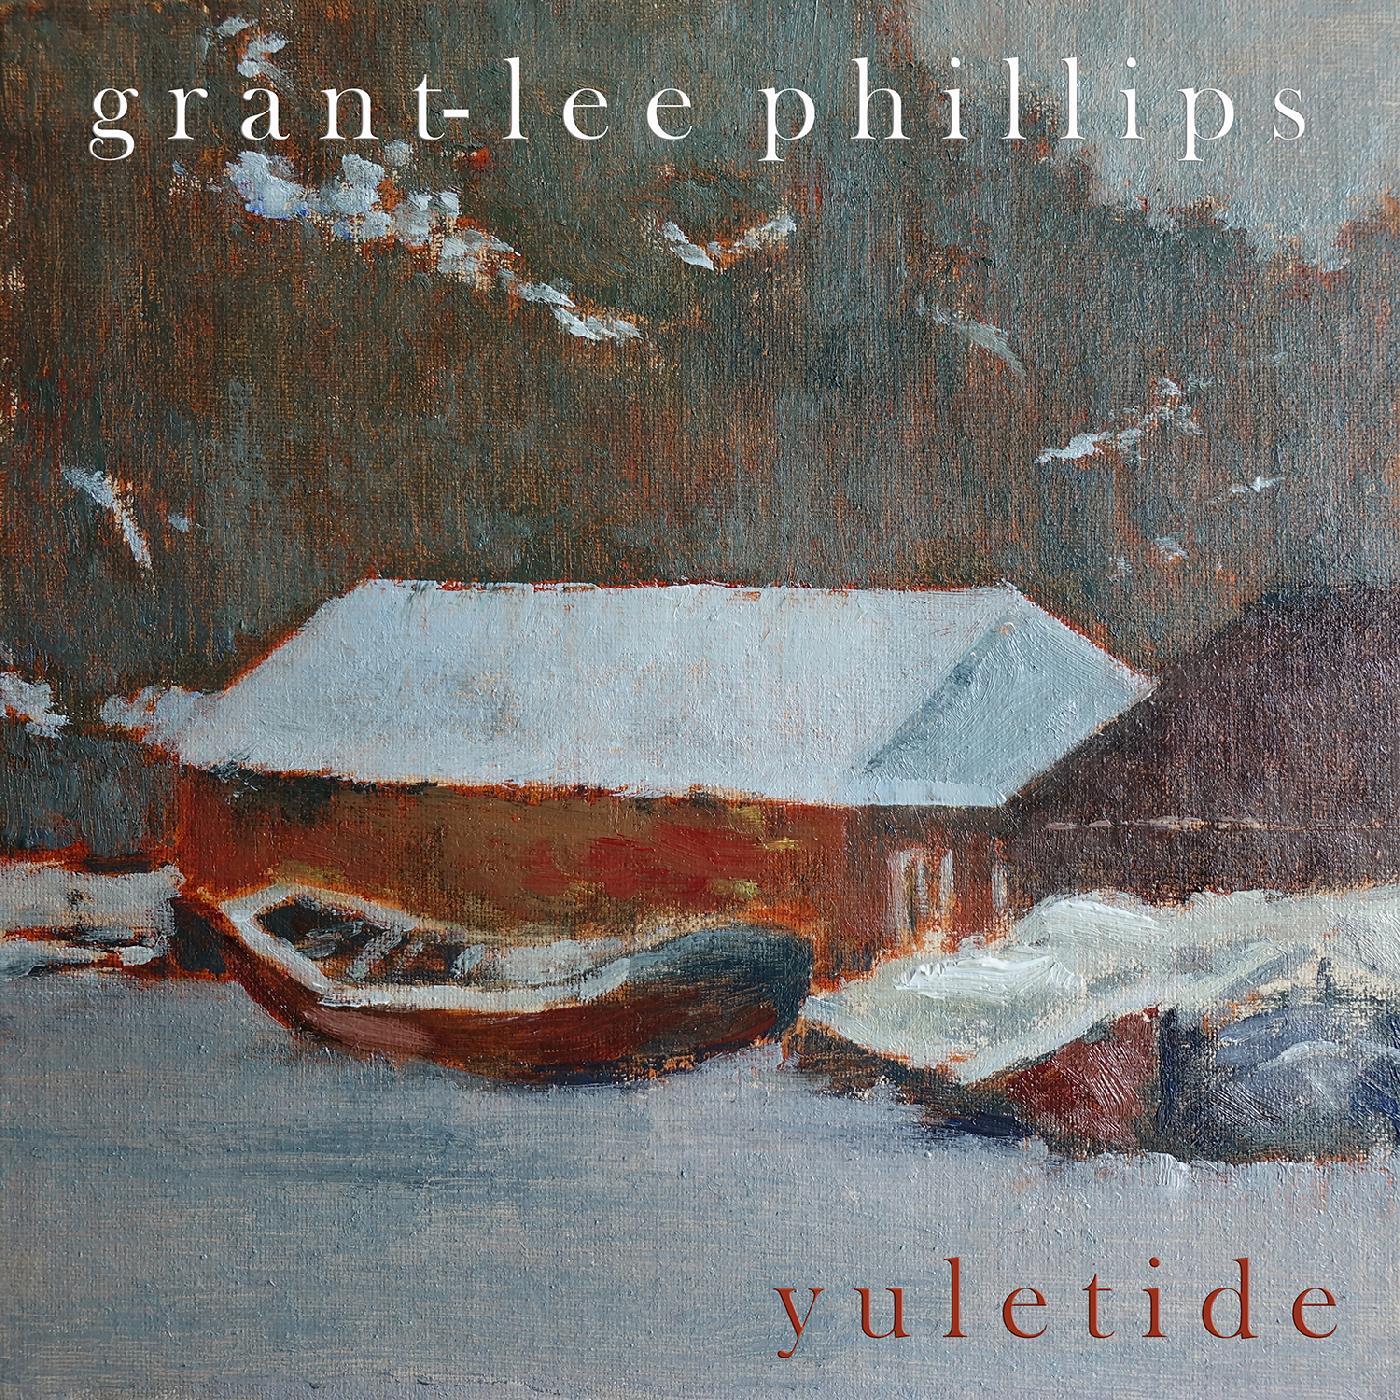 Gran-Lee Pillips "Yuletide" Green LP